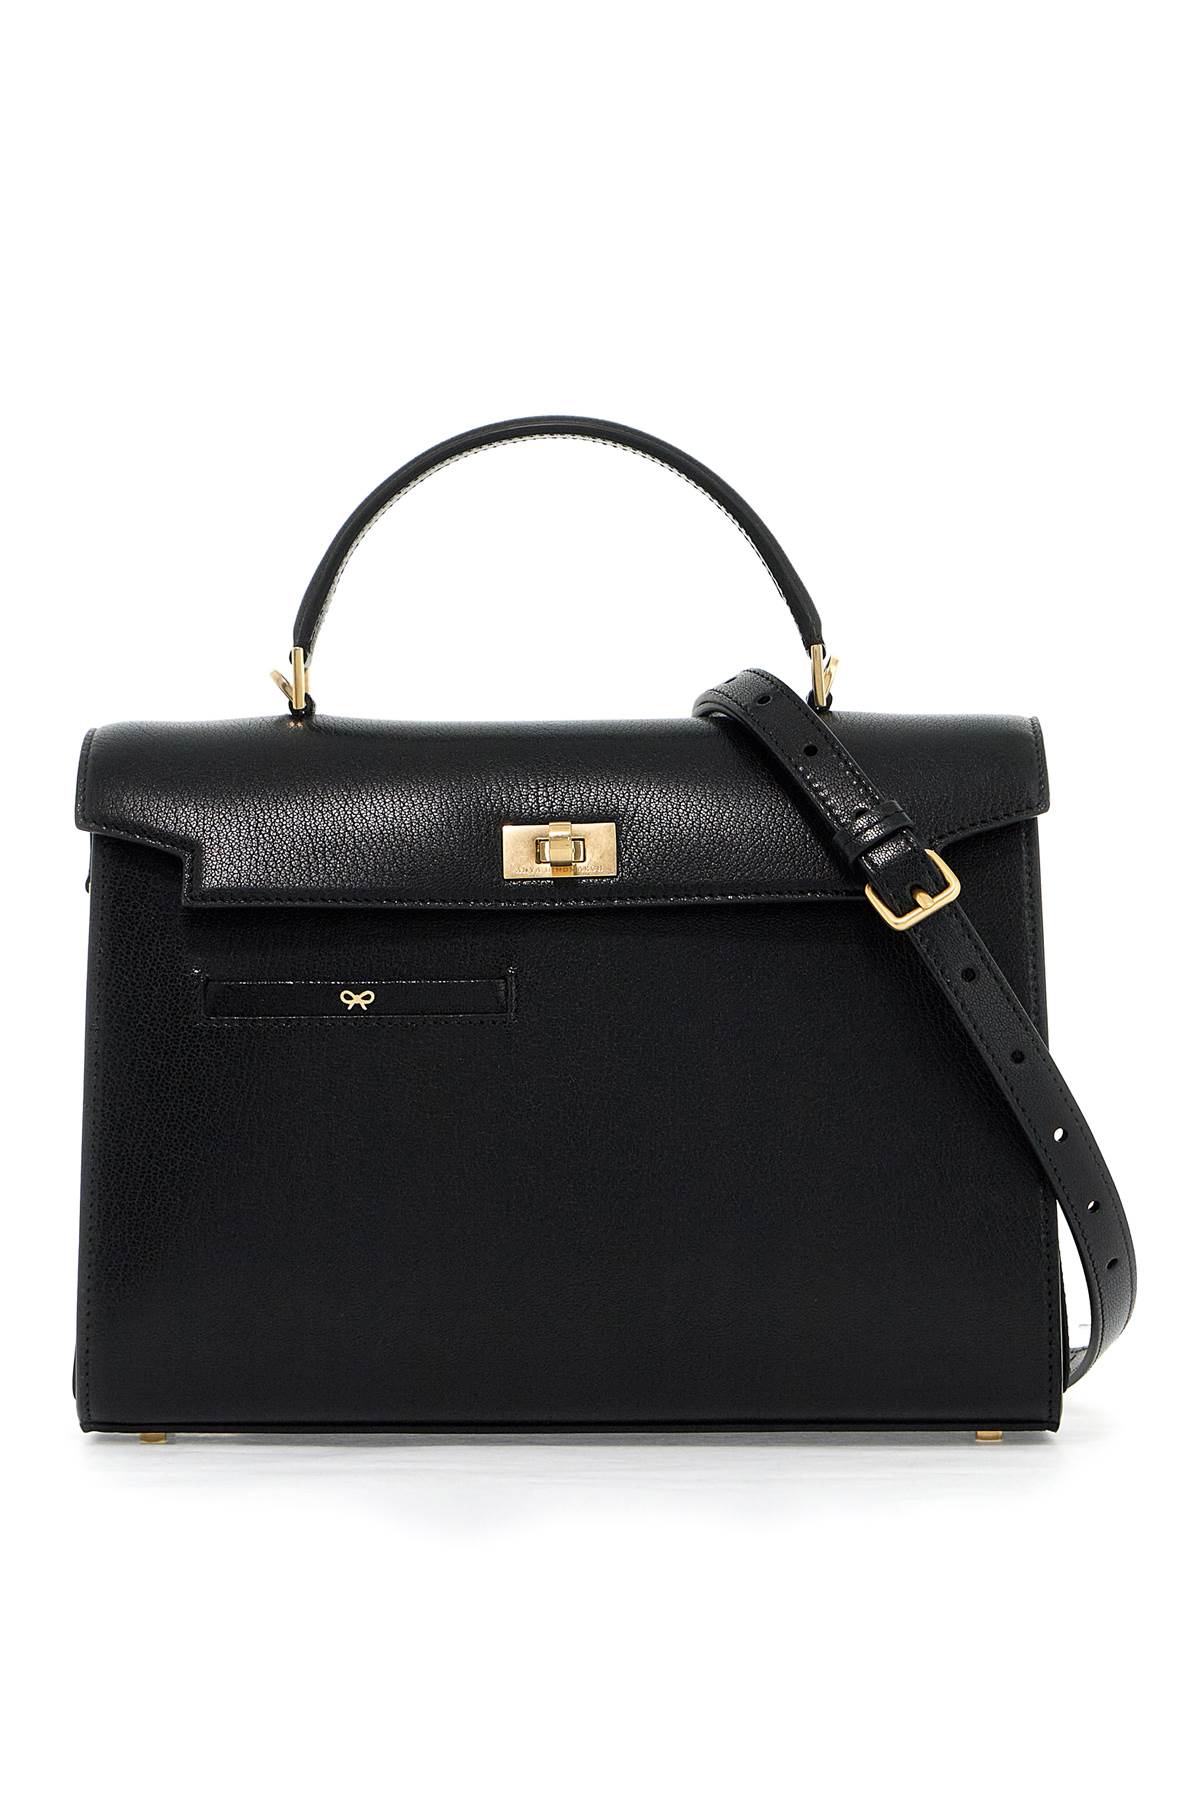 Anya Hindmarch mortimer handbag - Black